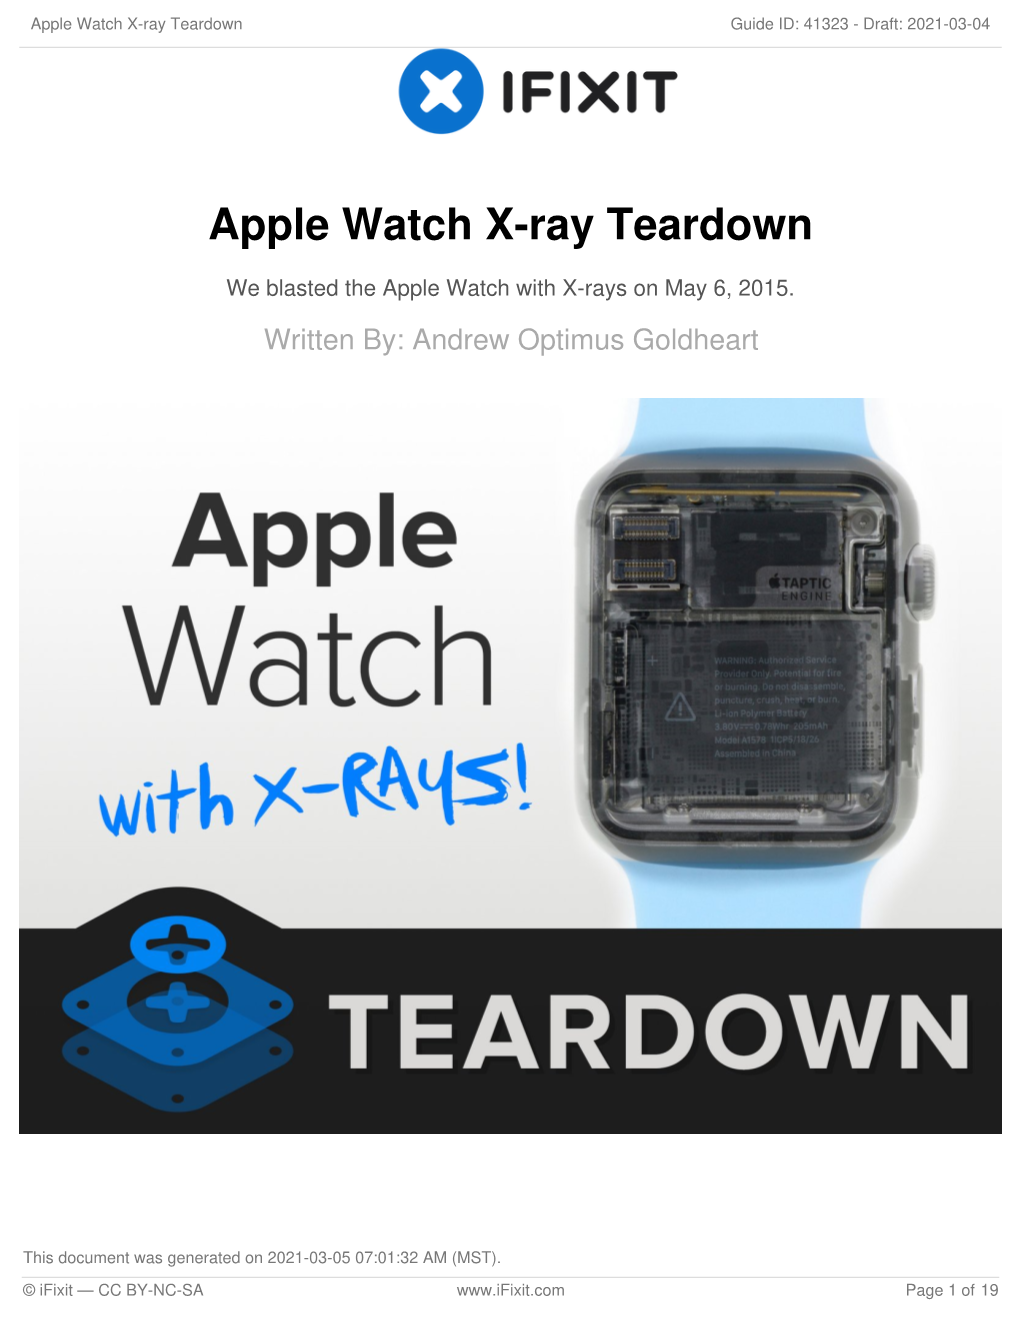 Apple Watch X-Ray Teardown Guide ID: 41323 - Draft: 2021-03-04